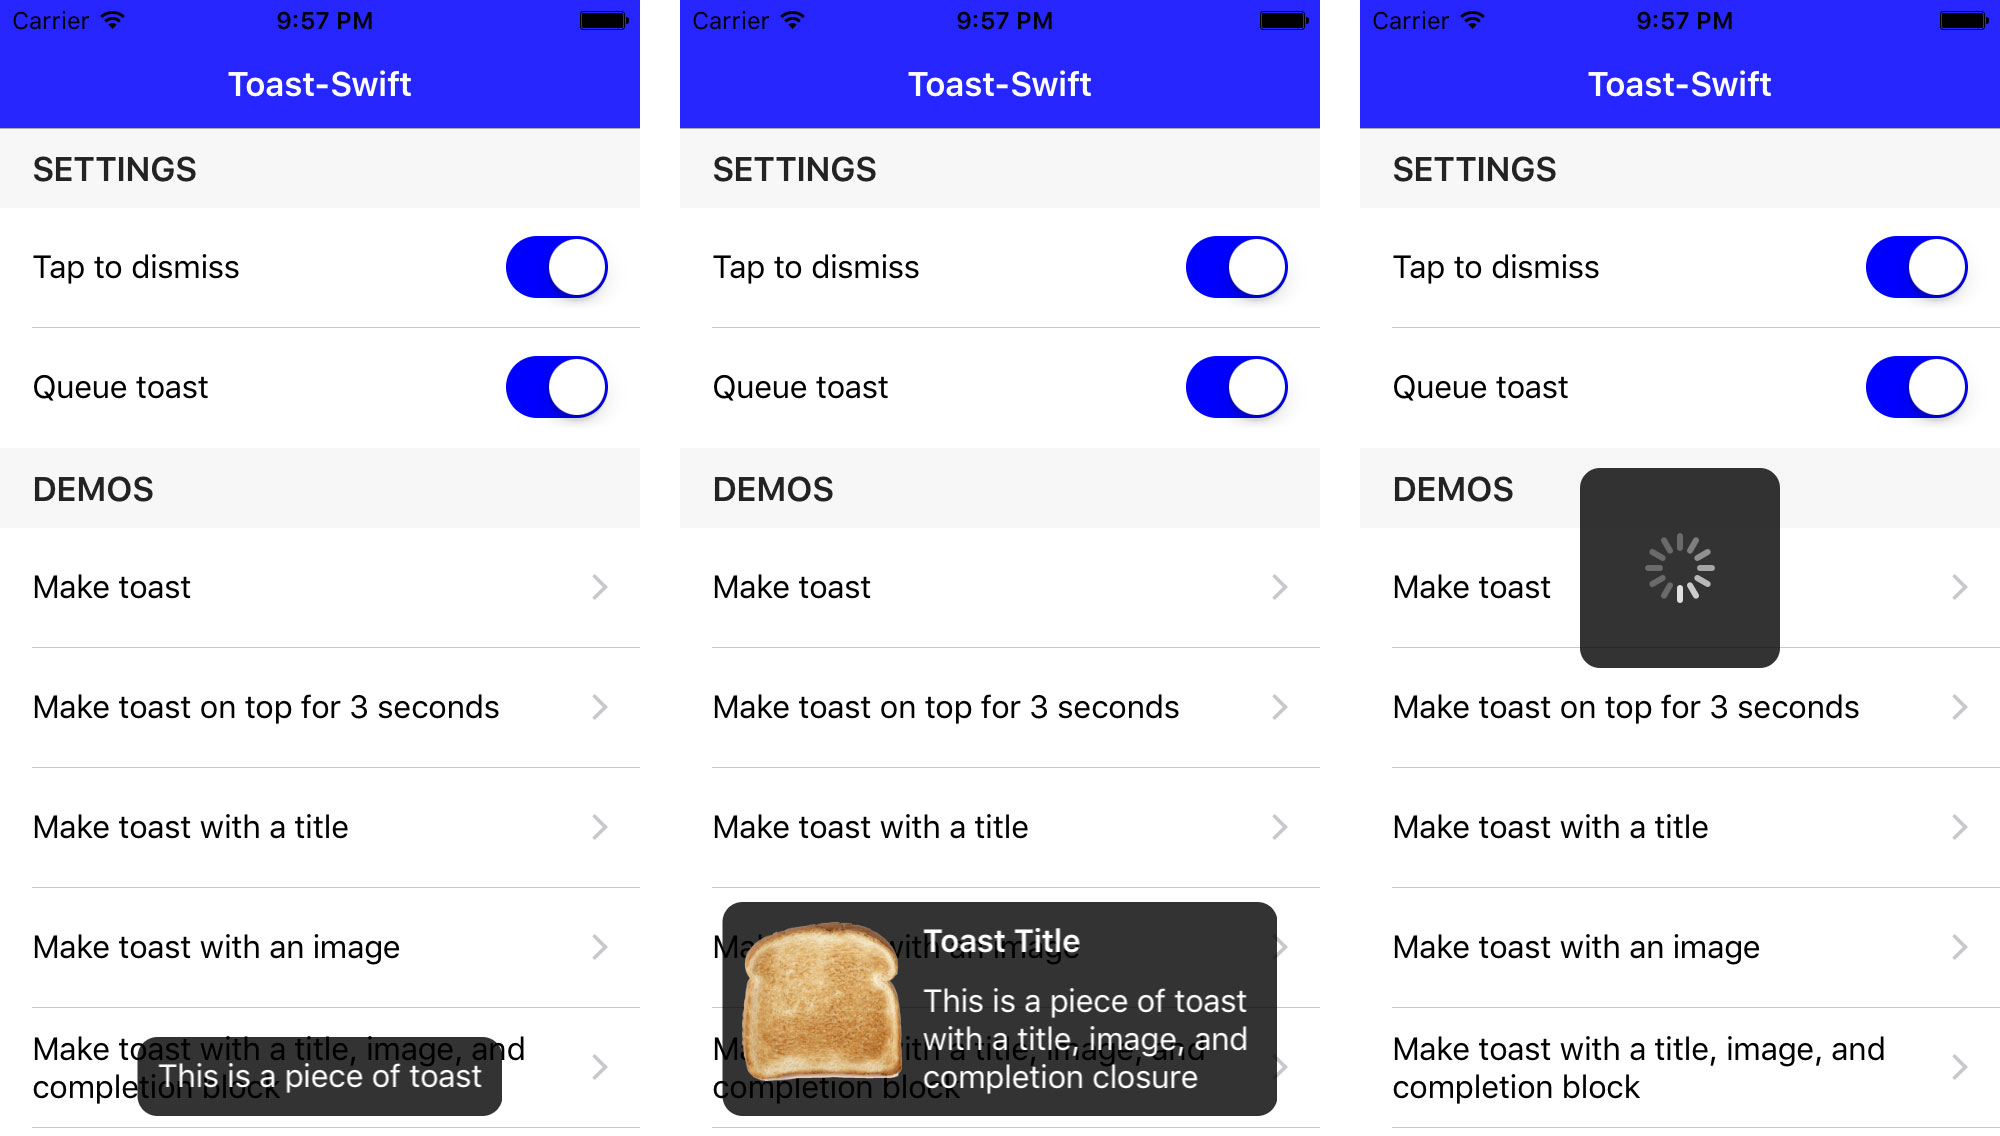 Toast-Swift Screenshots